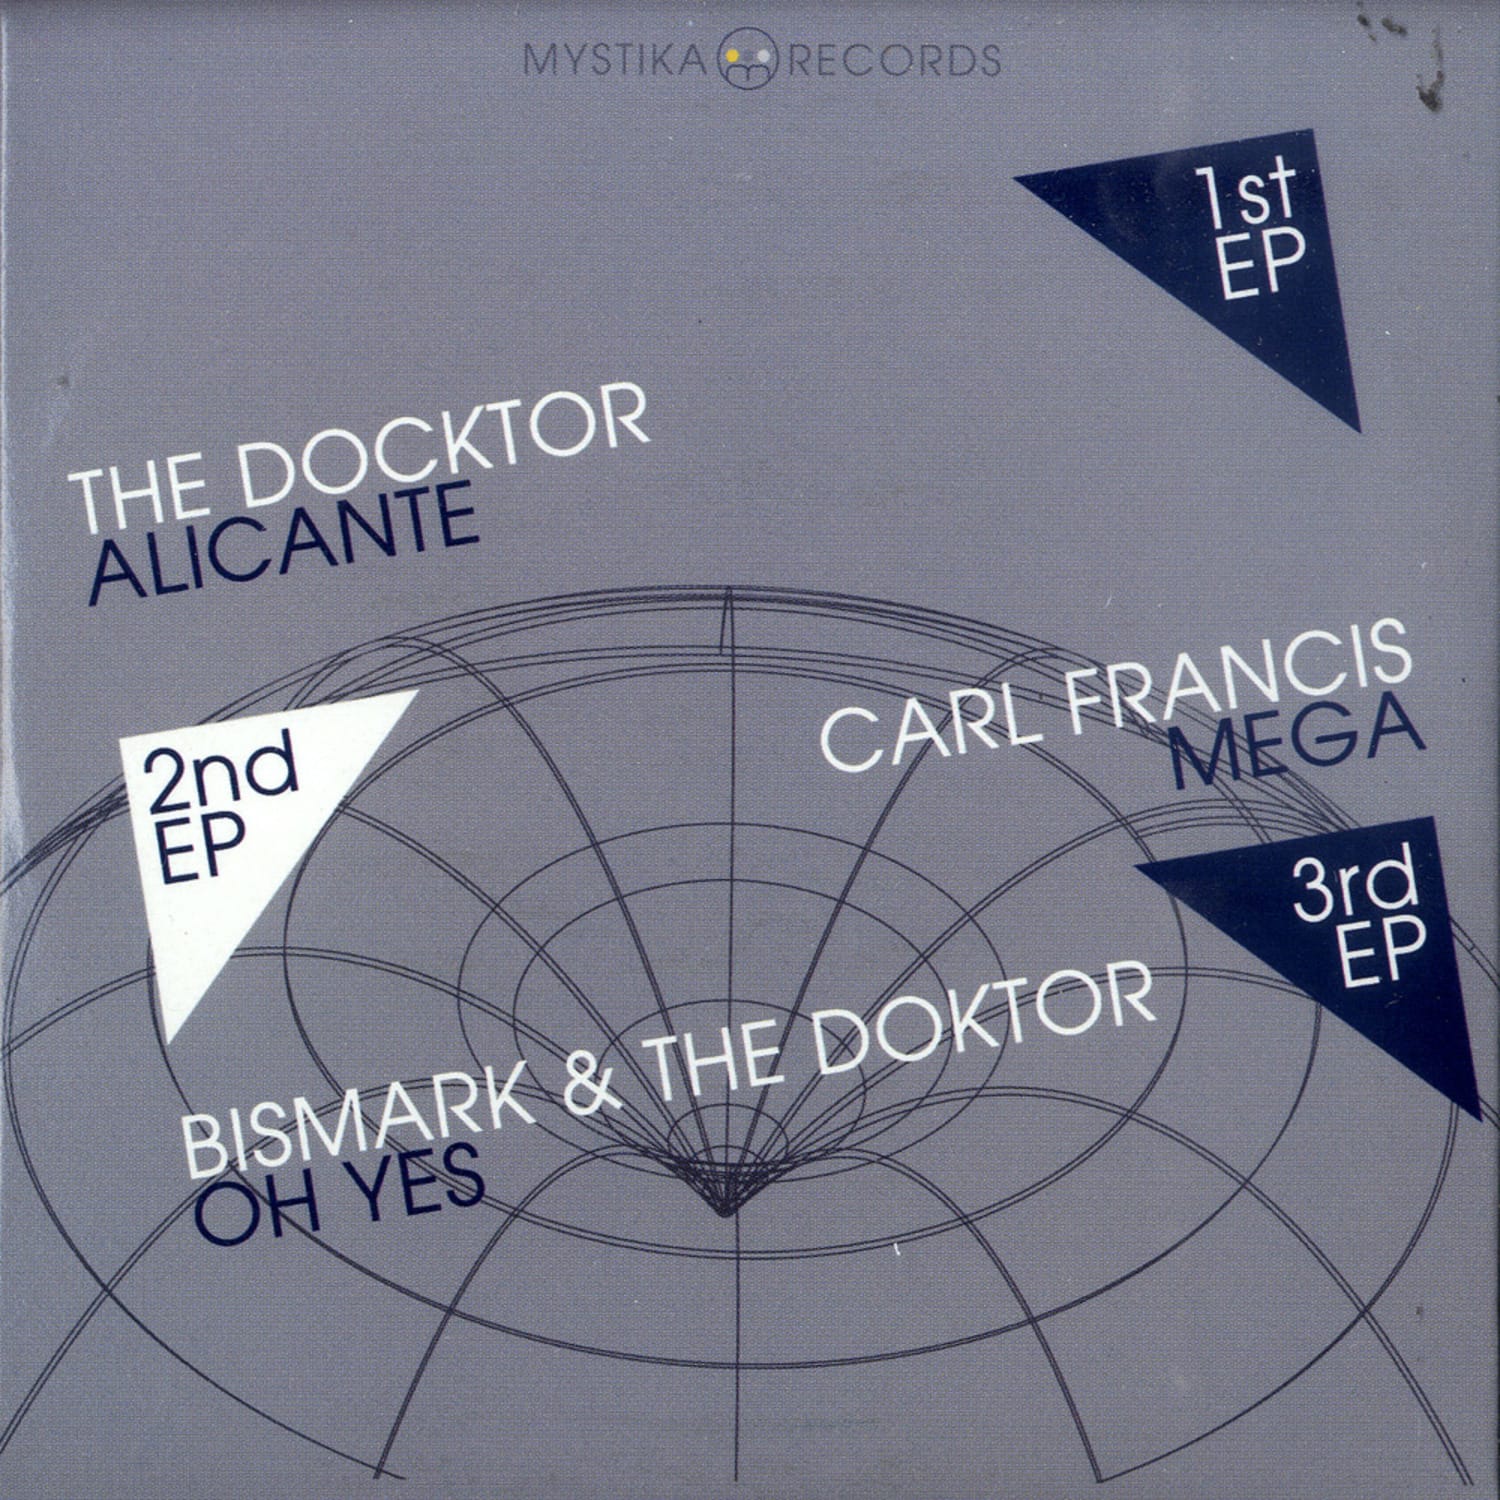 The Doktor - MYSTIKA EP VOLUME 2 